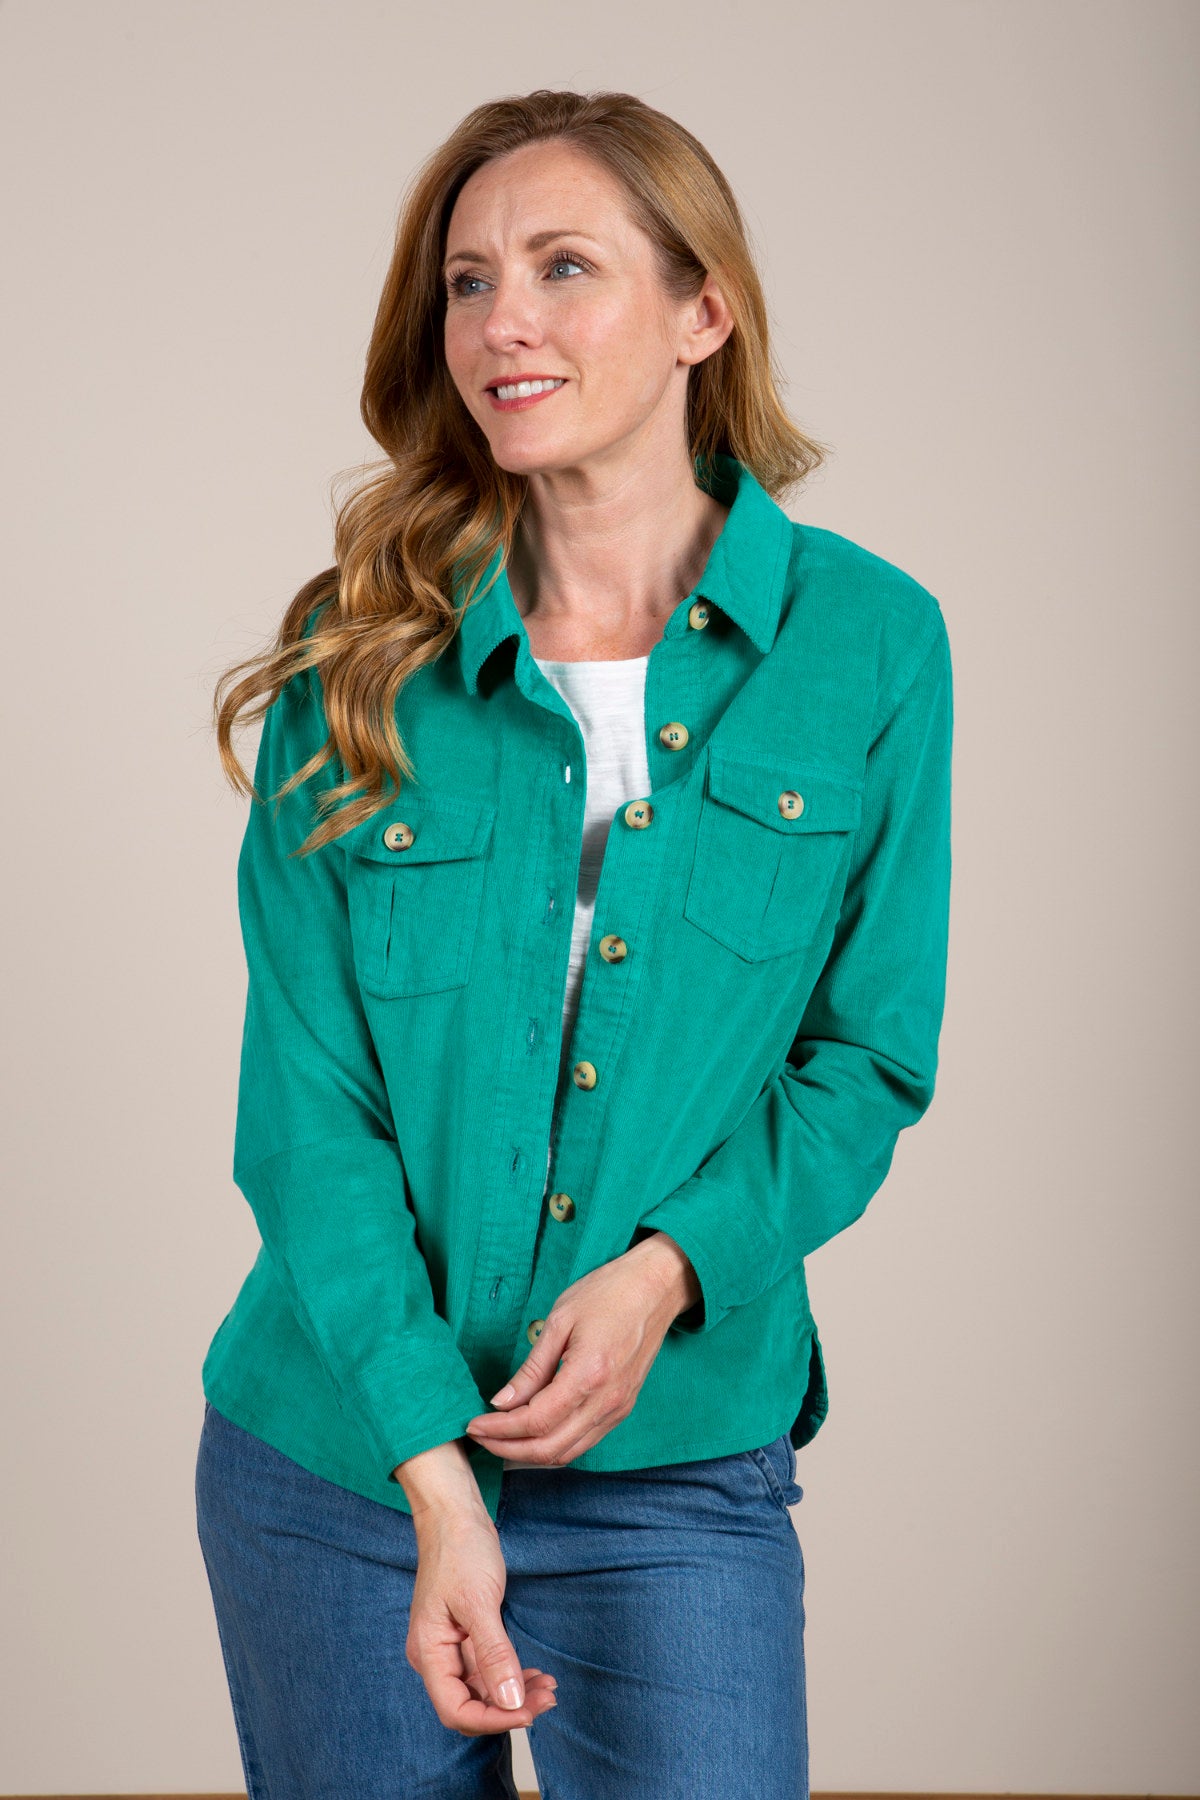 Pincot jacket, emerald